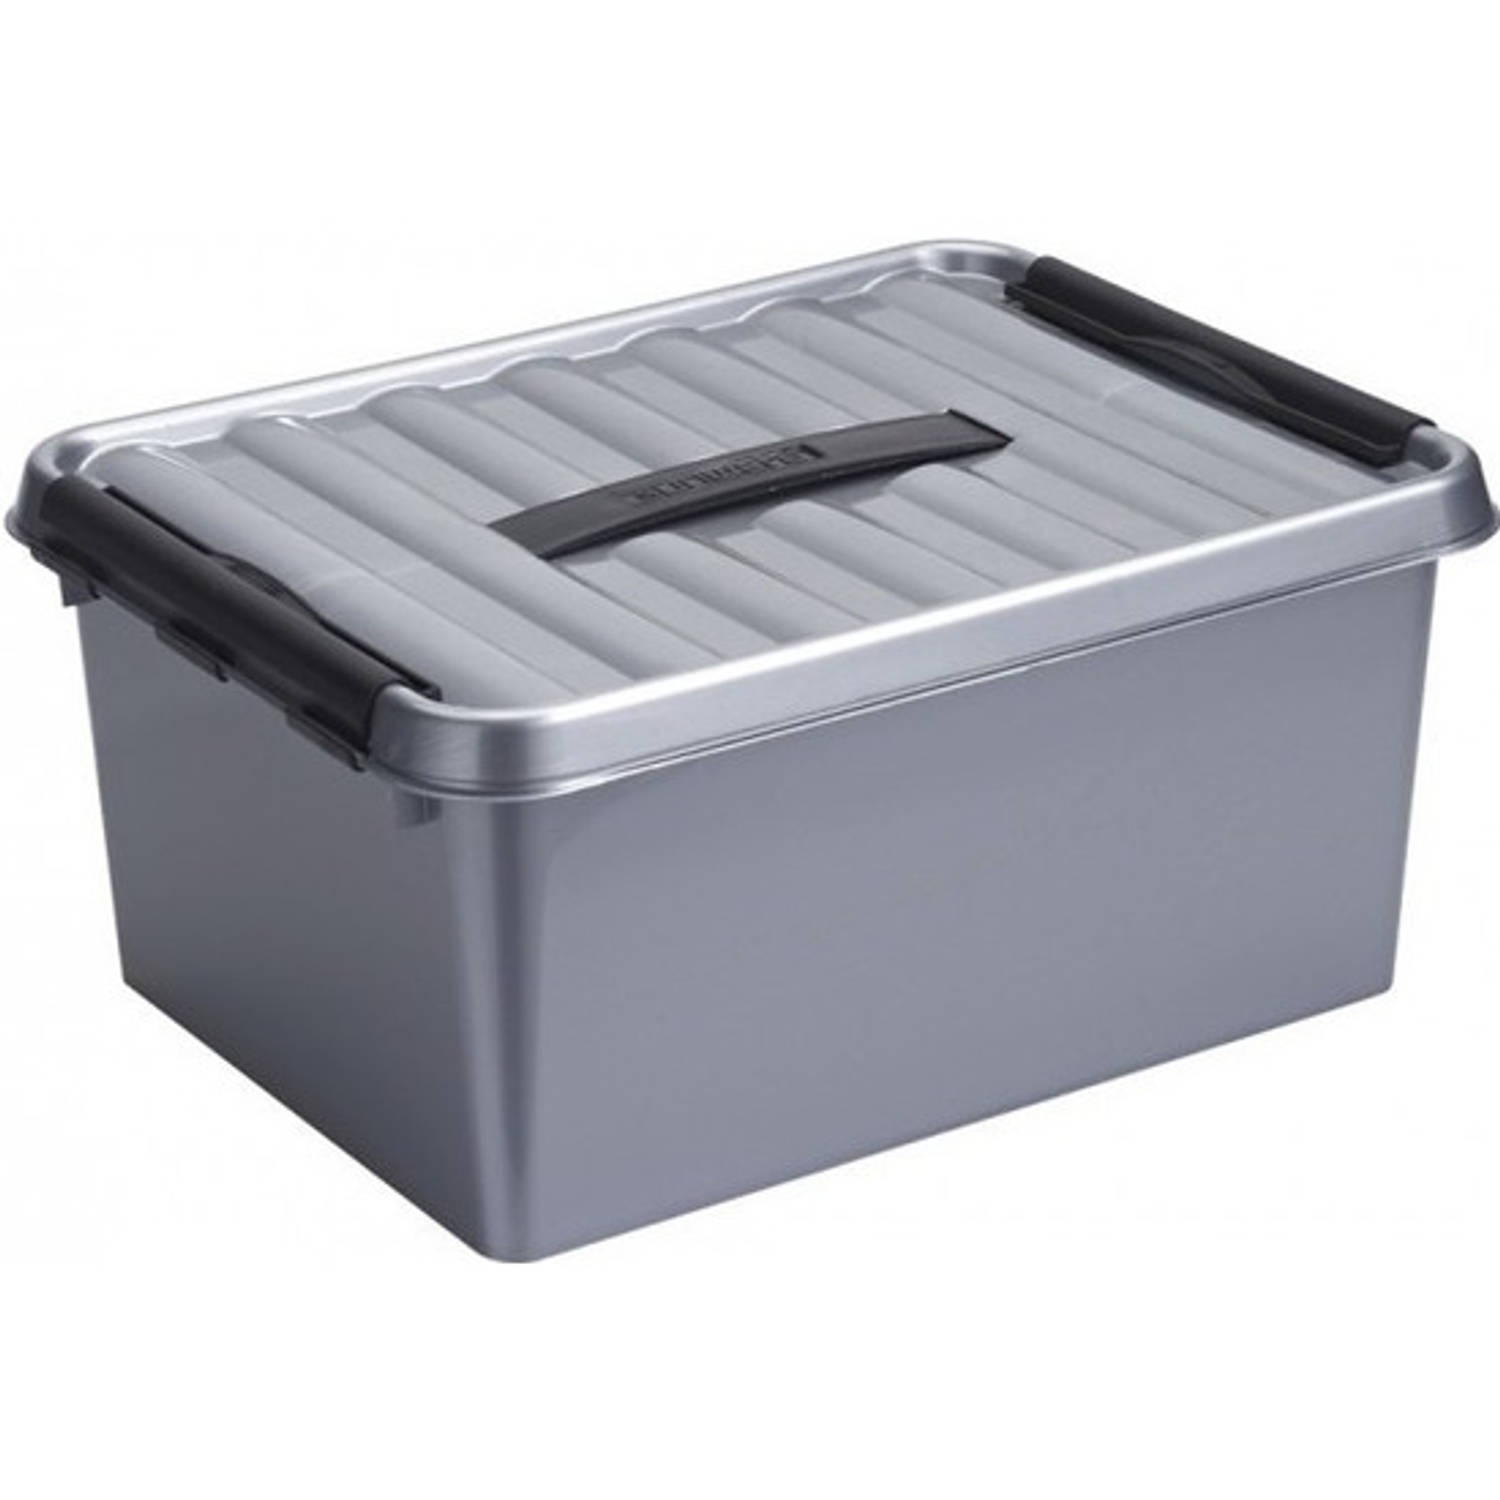 4x Opberg box-opbergdoos 15 liter 40 cm zilver-zwart A4 formaat pslagbox Opbergbak kunststof